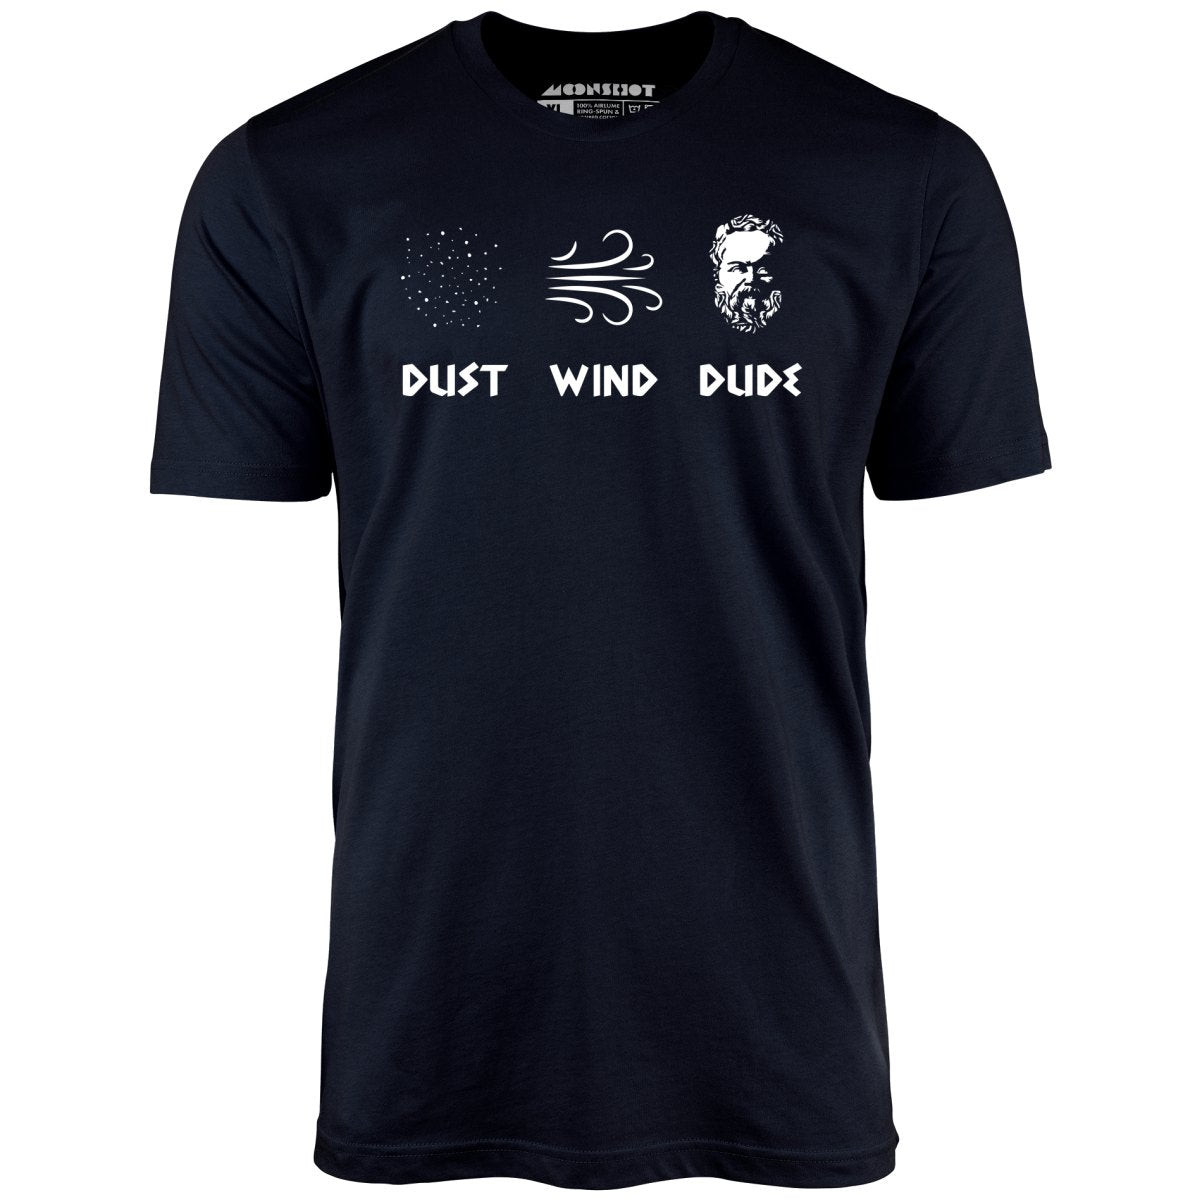 Socrates - Dust, Wind, Dude - Unisex T-Shirt